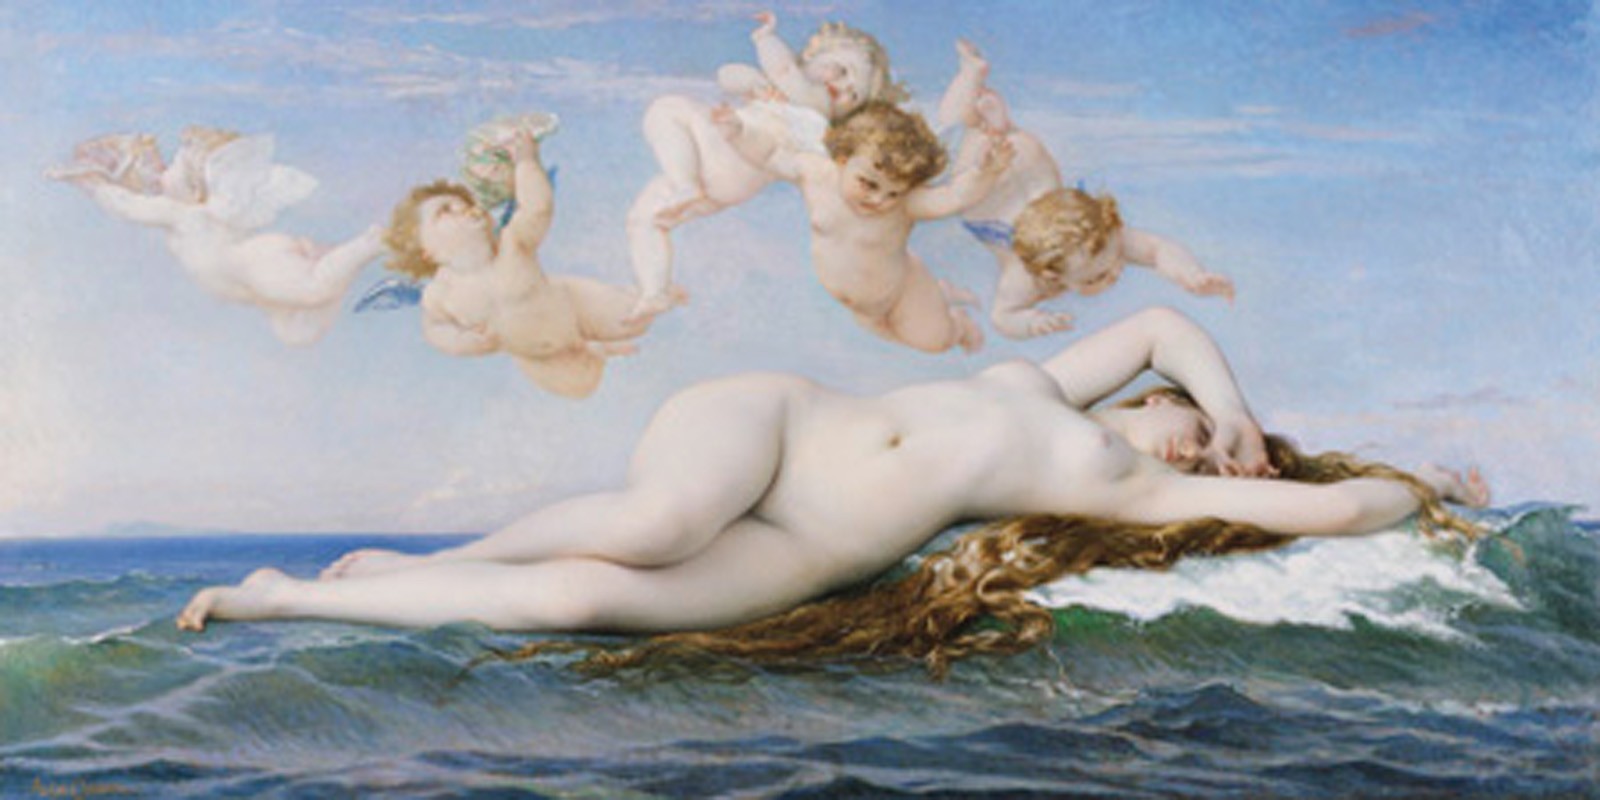 Cabanel Alexandre - The Birth of Venus